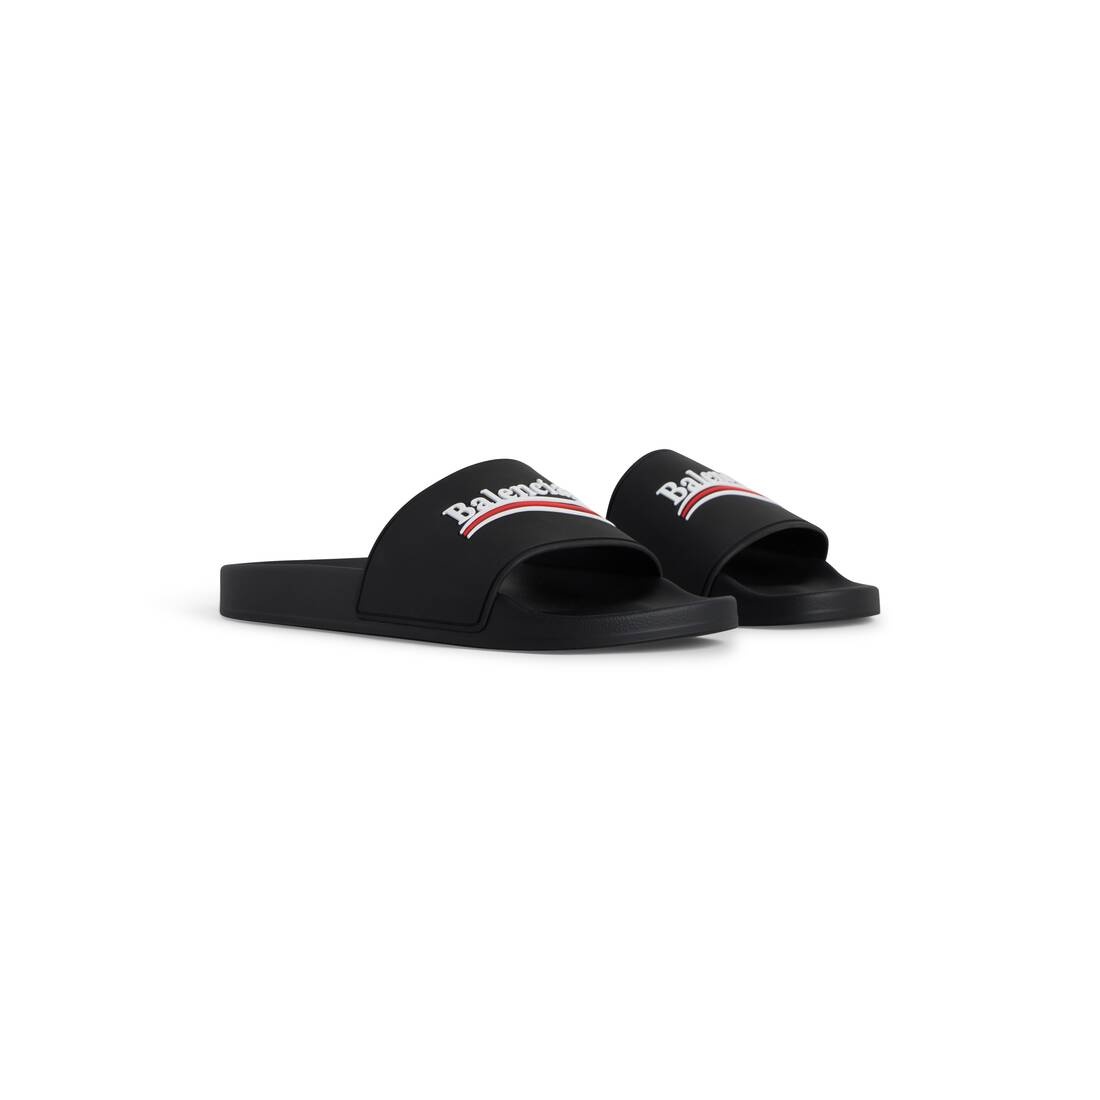 Men's Pool Slide Sandal in Black - 2